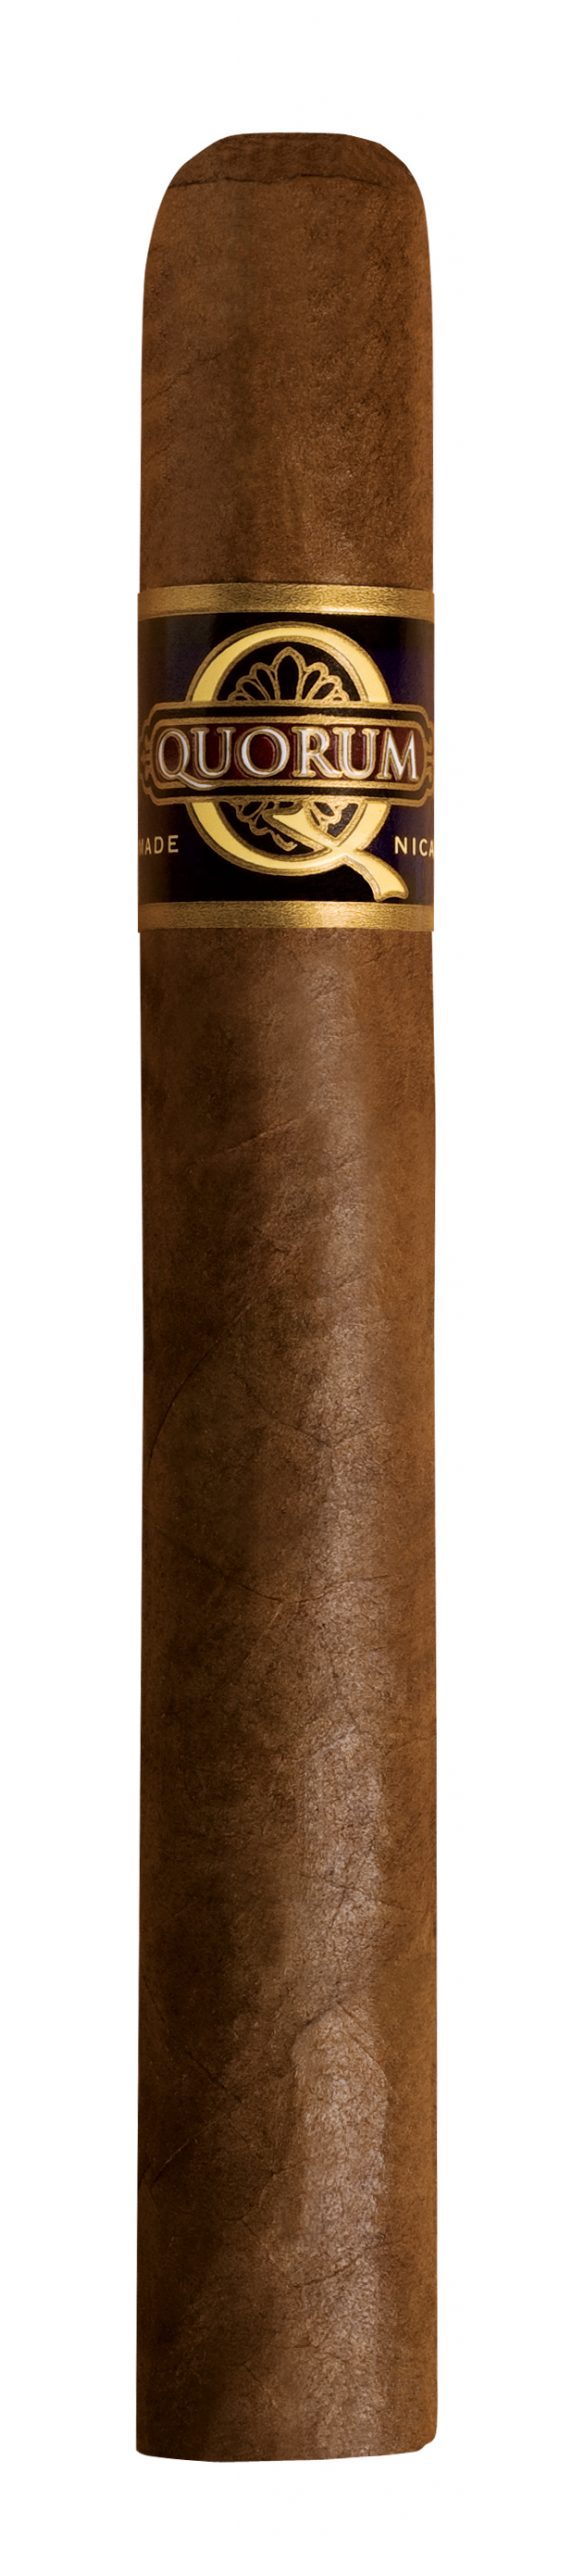 quorum toro single cigar